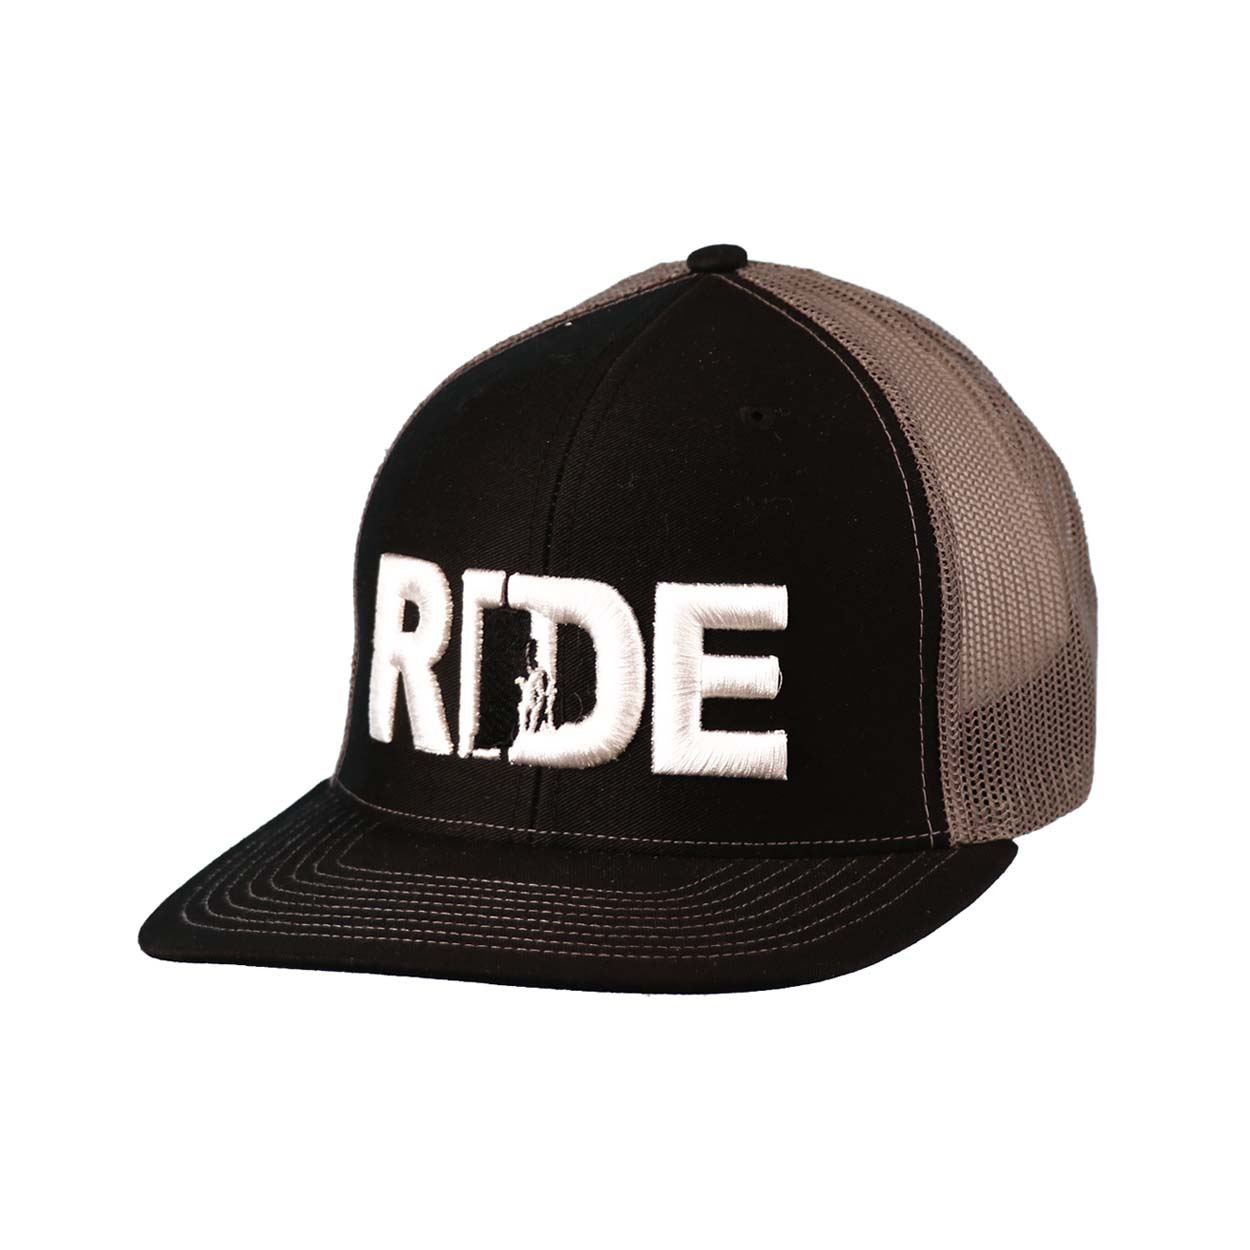 Ride Rhode Island Classic Pro 3D Puff Embroidered Snapback Trucker Hat Black/Gray